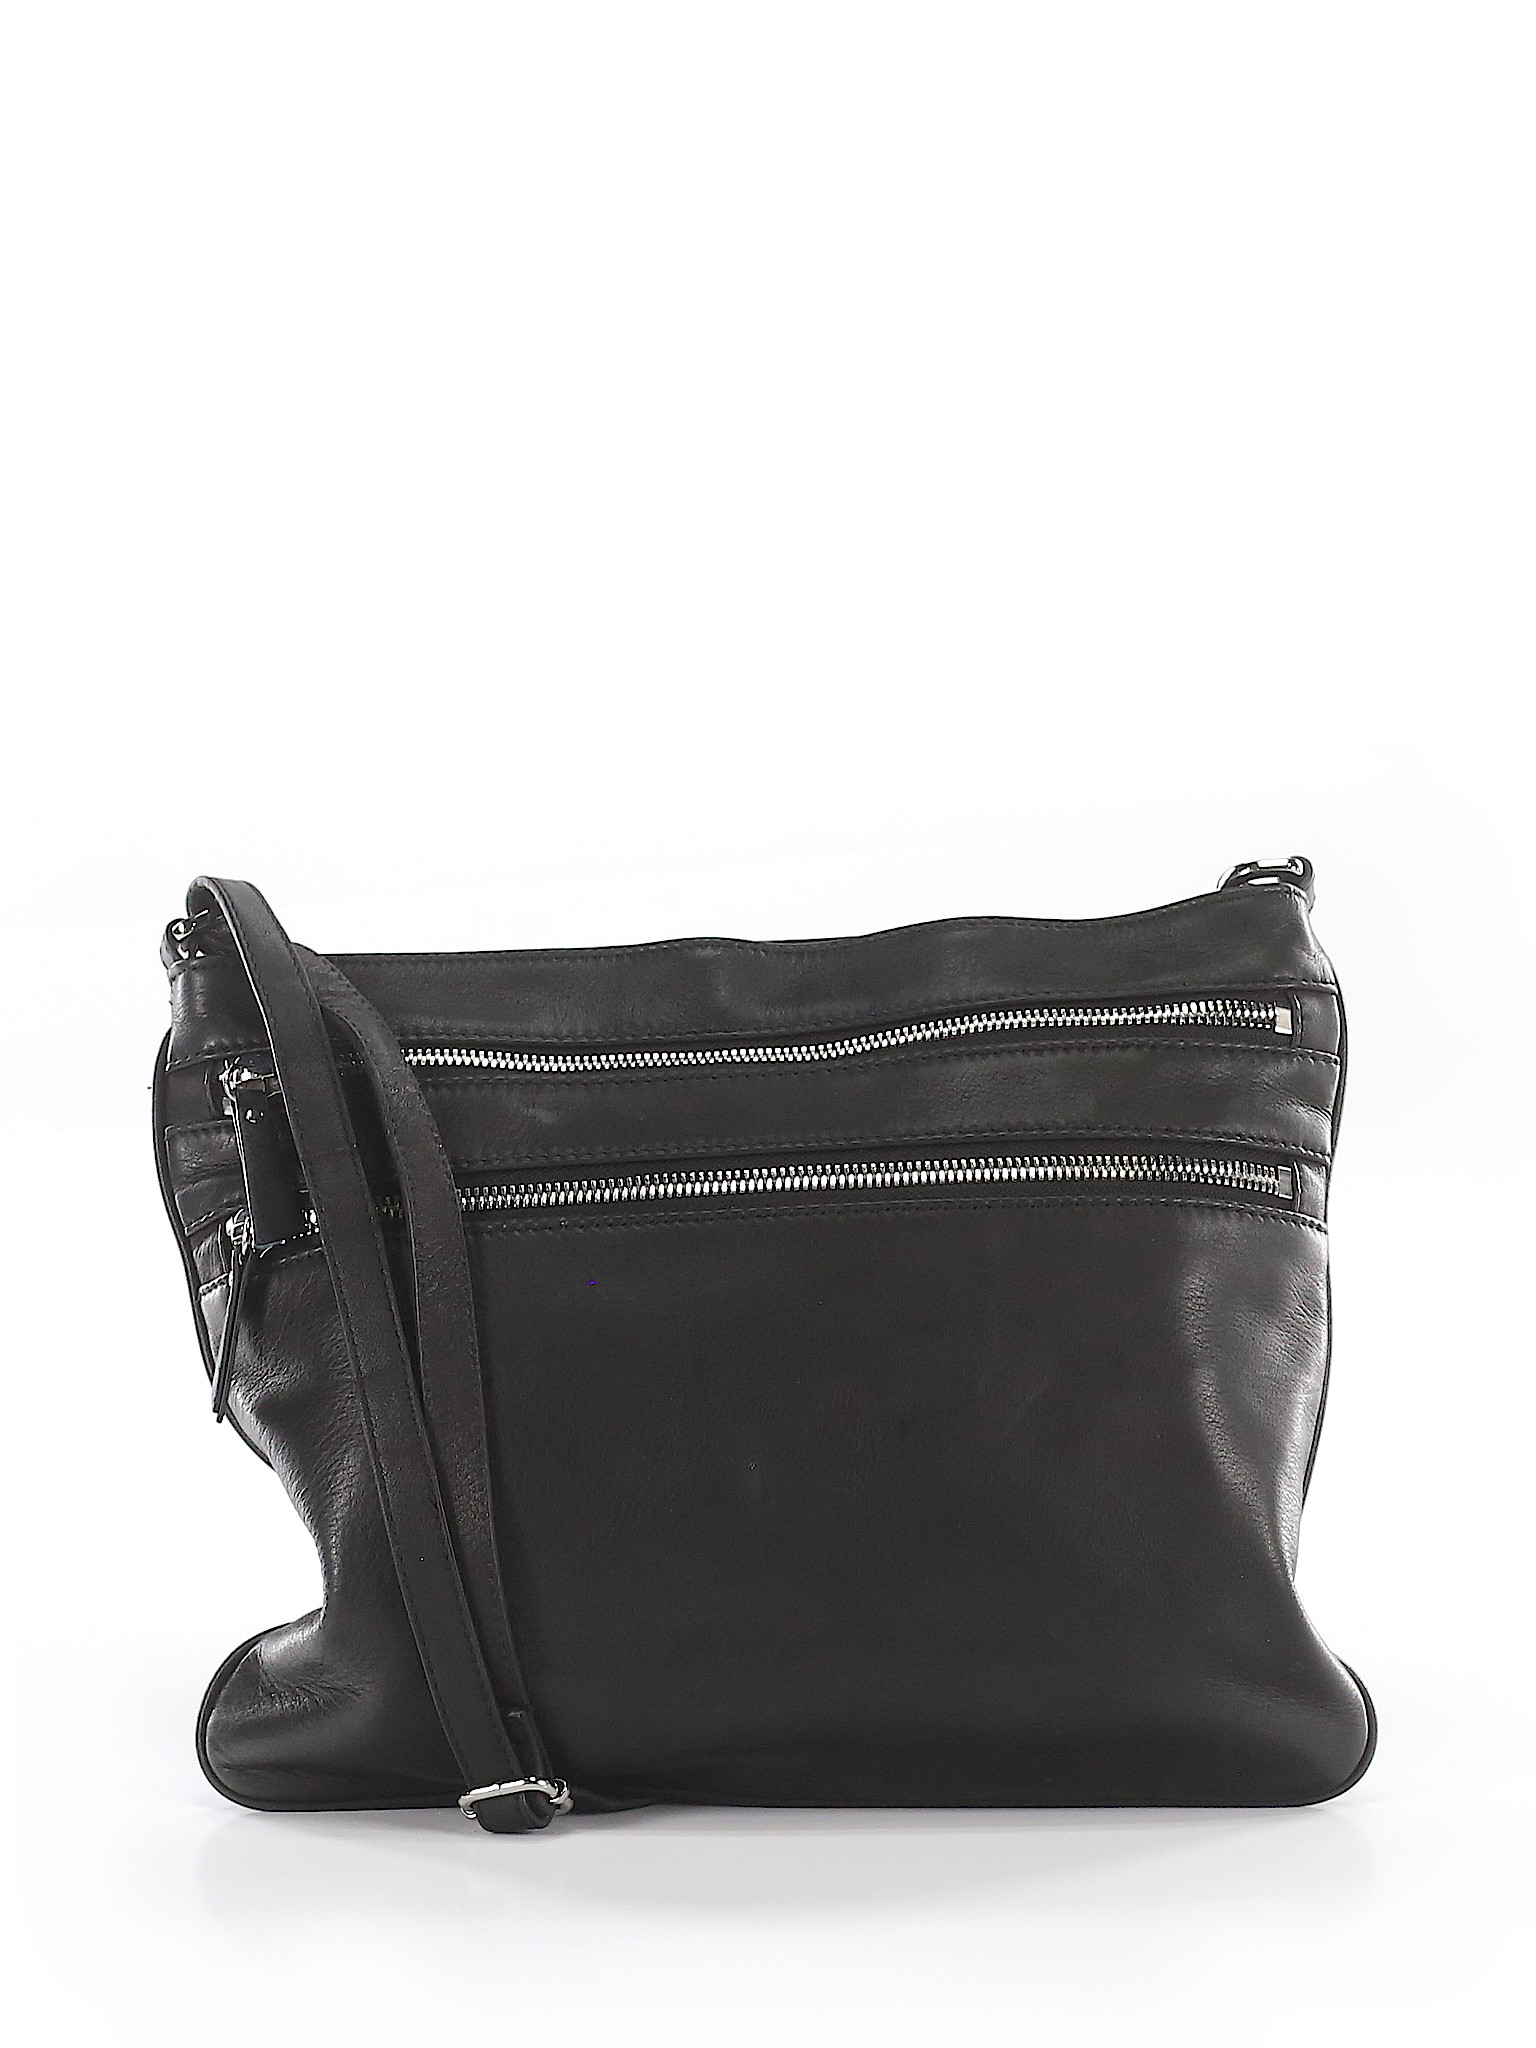 Margot Black Crossbody Bag One Size - 75% off | thredUP